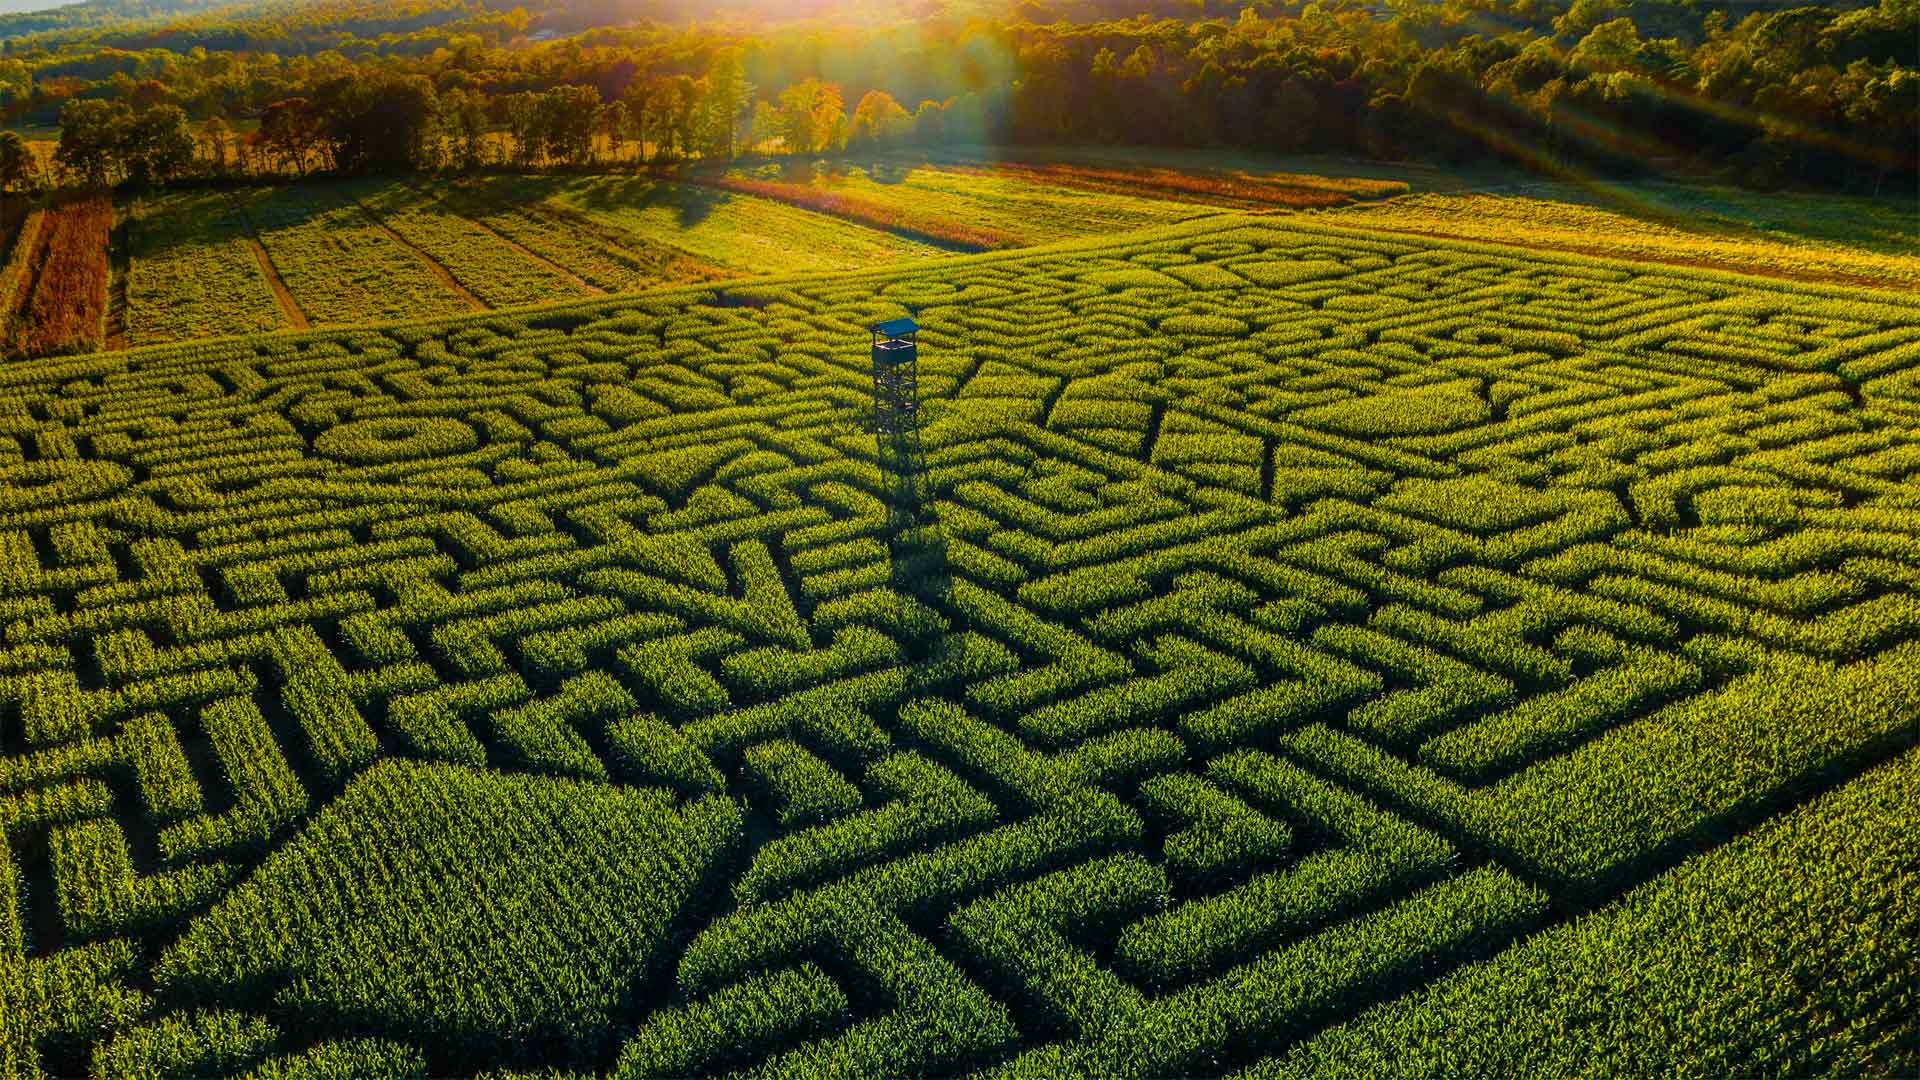 Mazezilla corn maze at Klingel's Farm in Pennsylvania - Alex Potemkin/Getty Images)